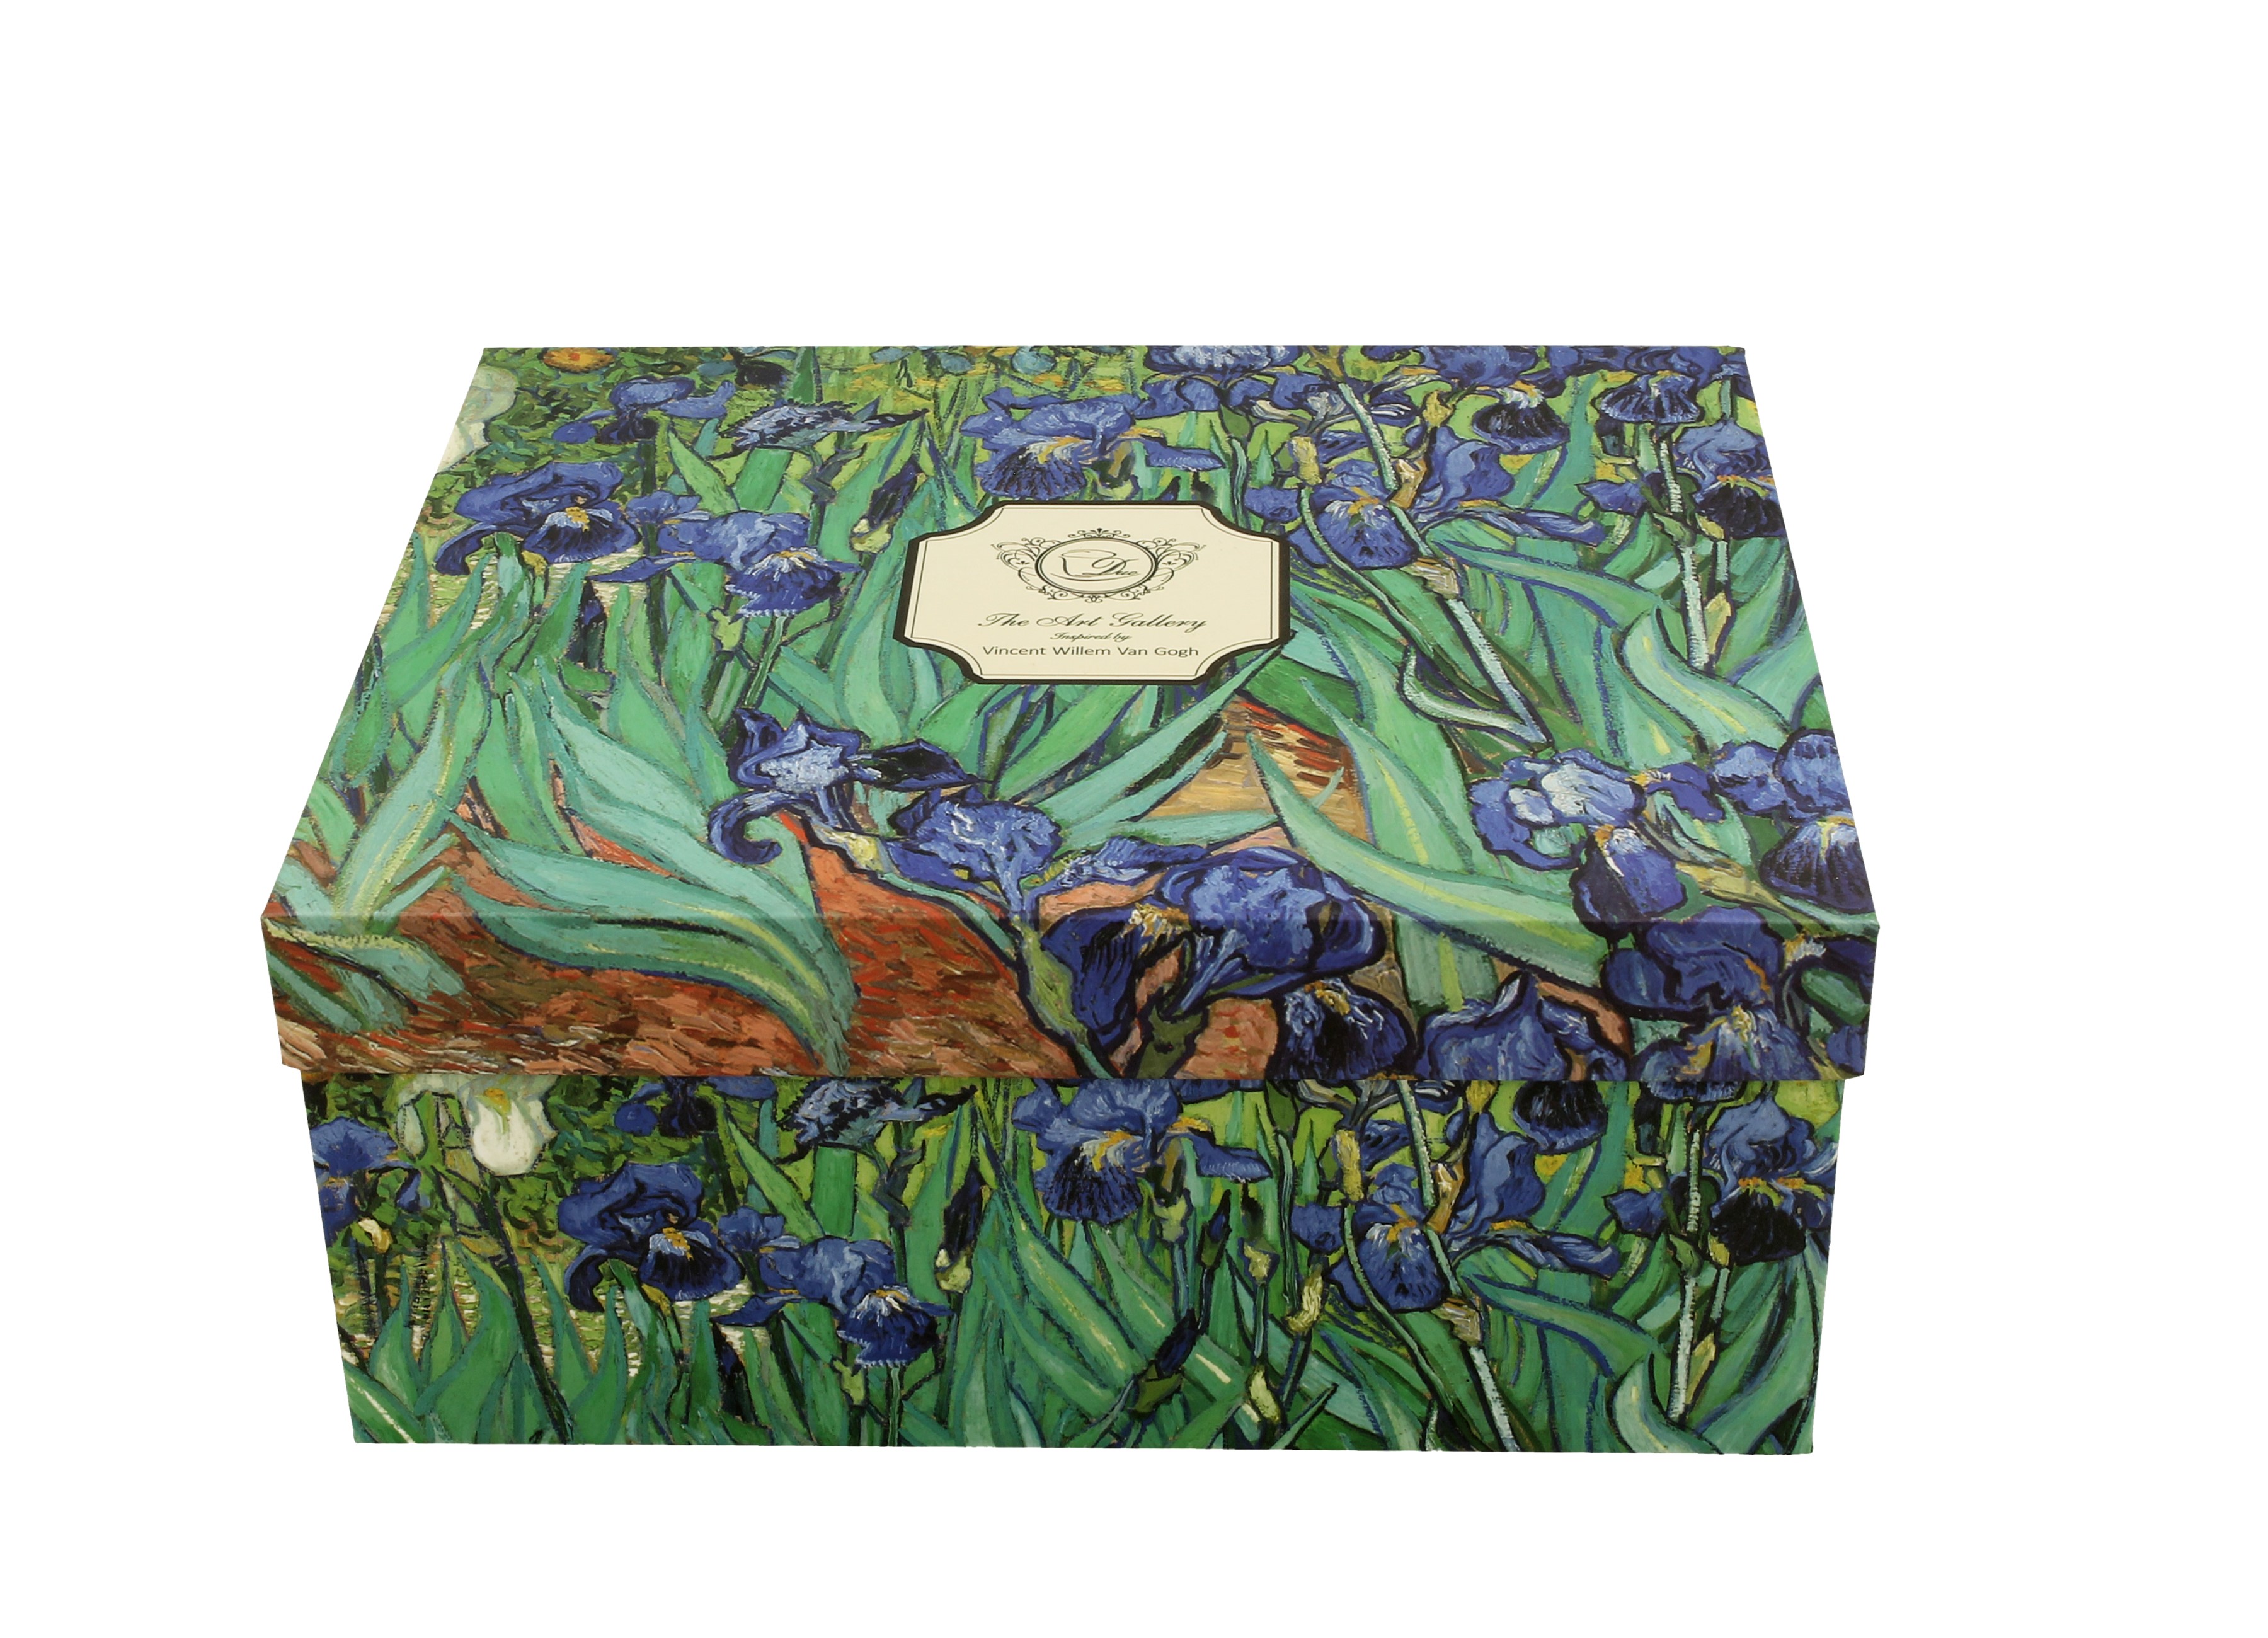 Sada dvoch luxusných šálok s podšálkou Vincent Van Gogh - Irises 270 ml